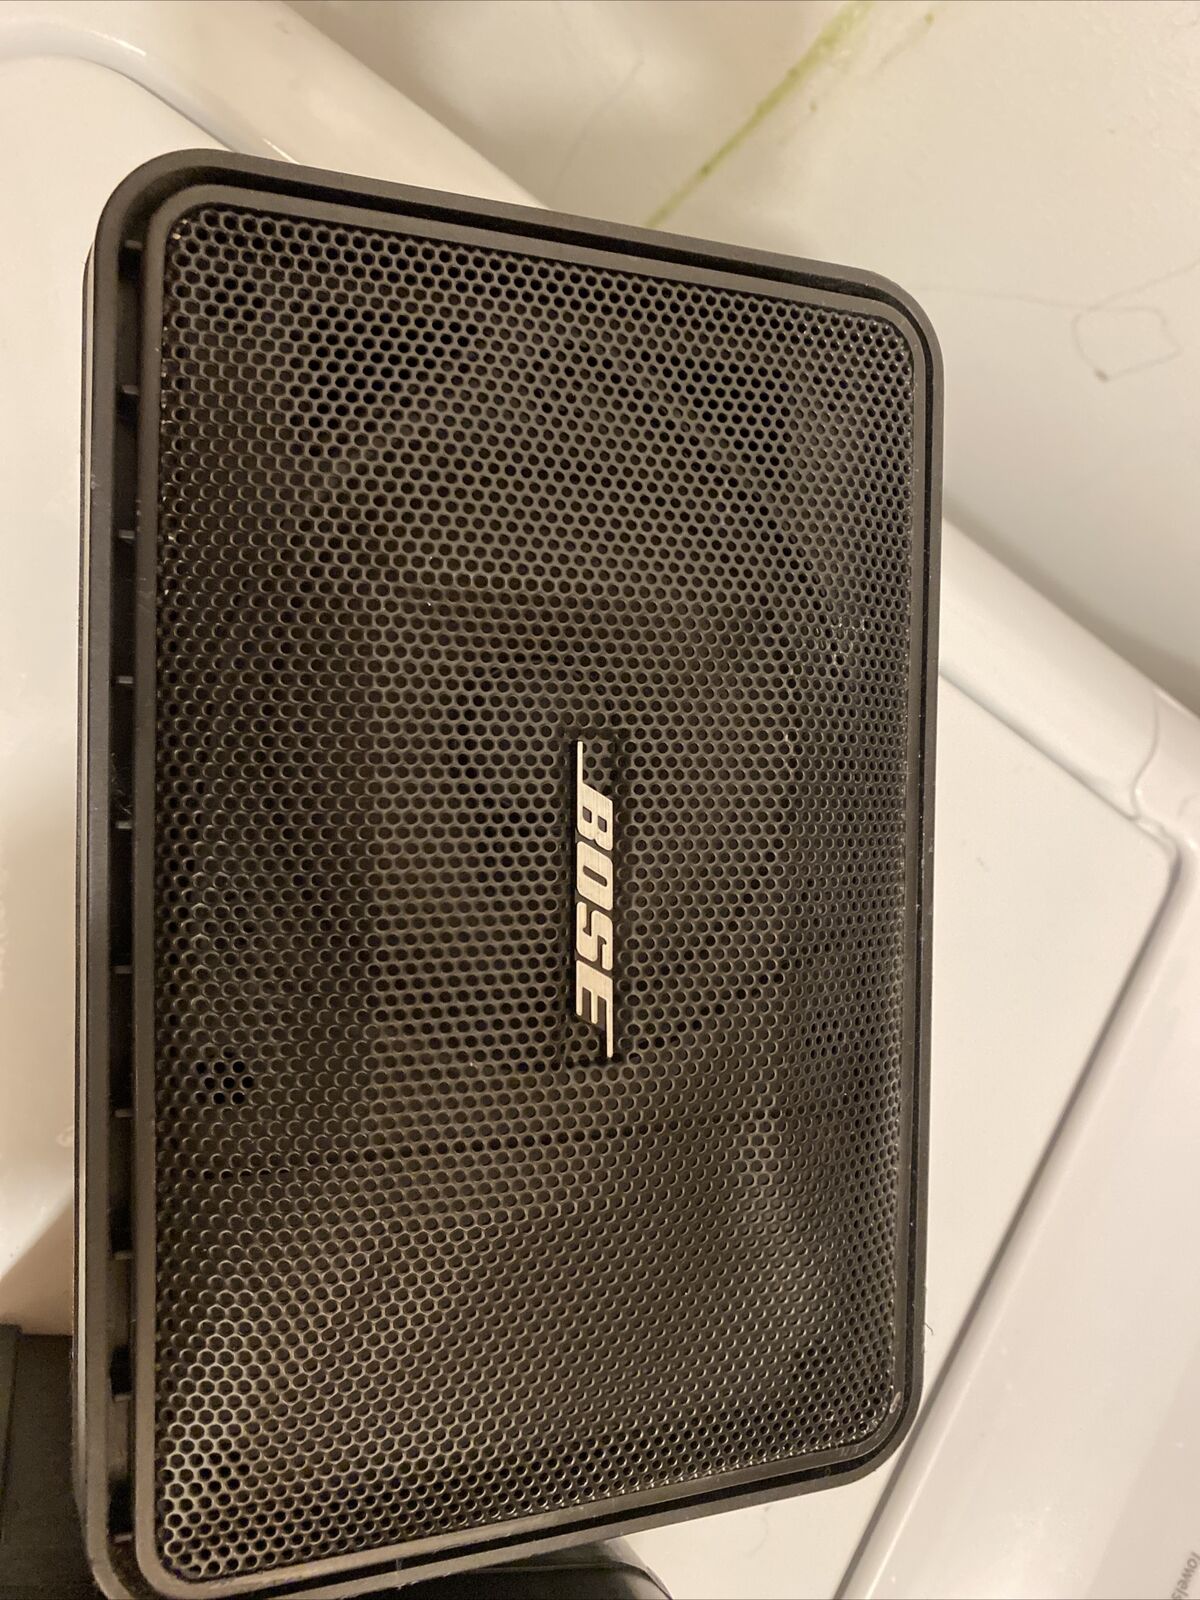 Bose Model 101 Music Monitor Speakers 60 Watt - TESTED - WORKS GREAT